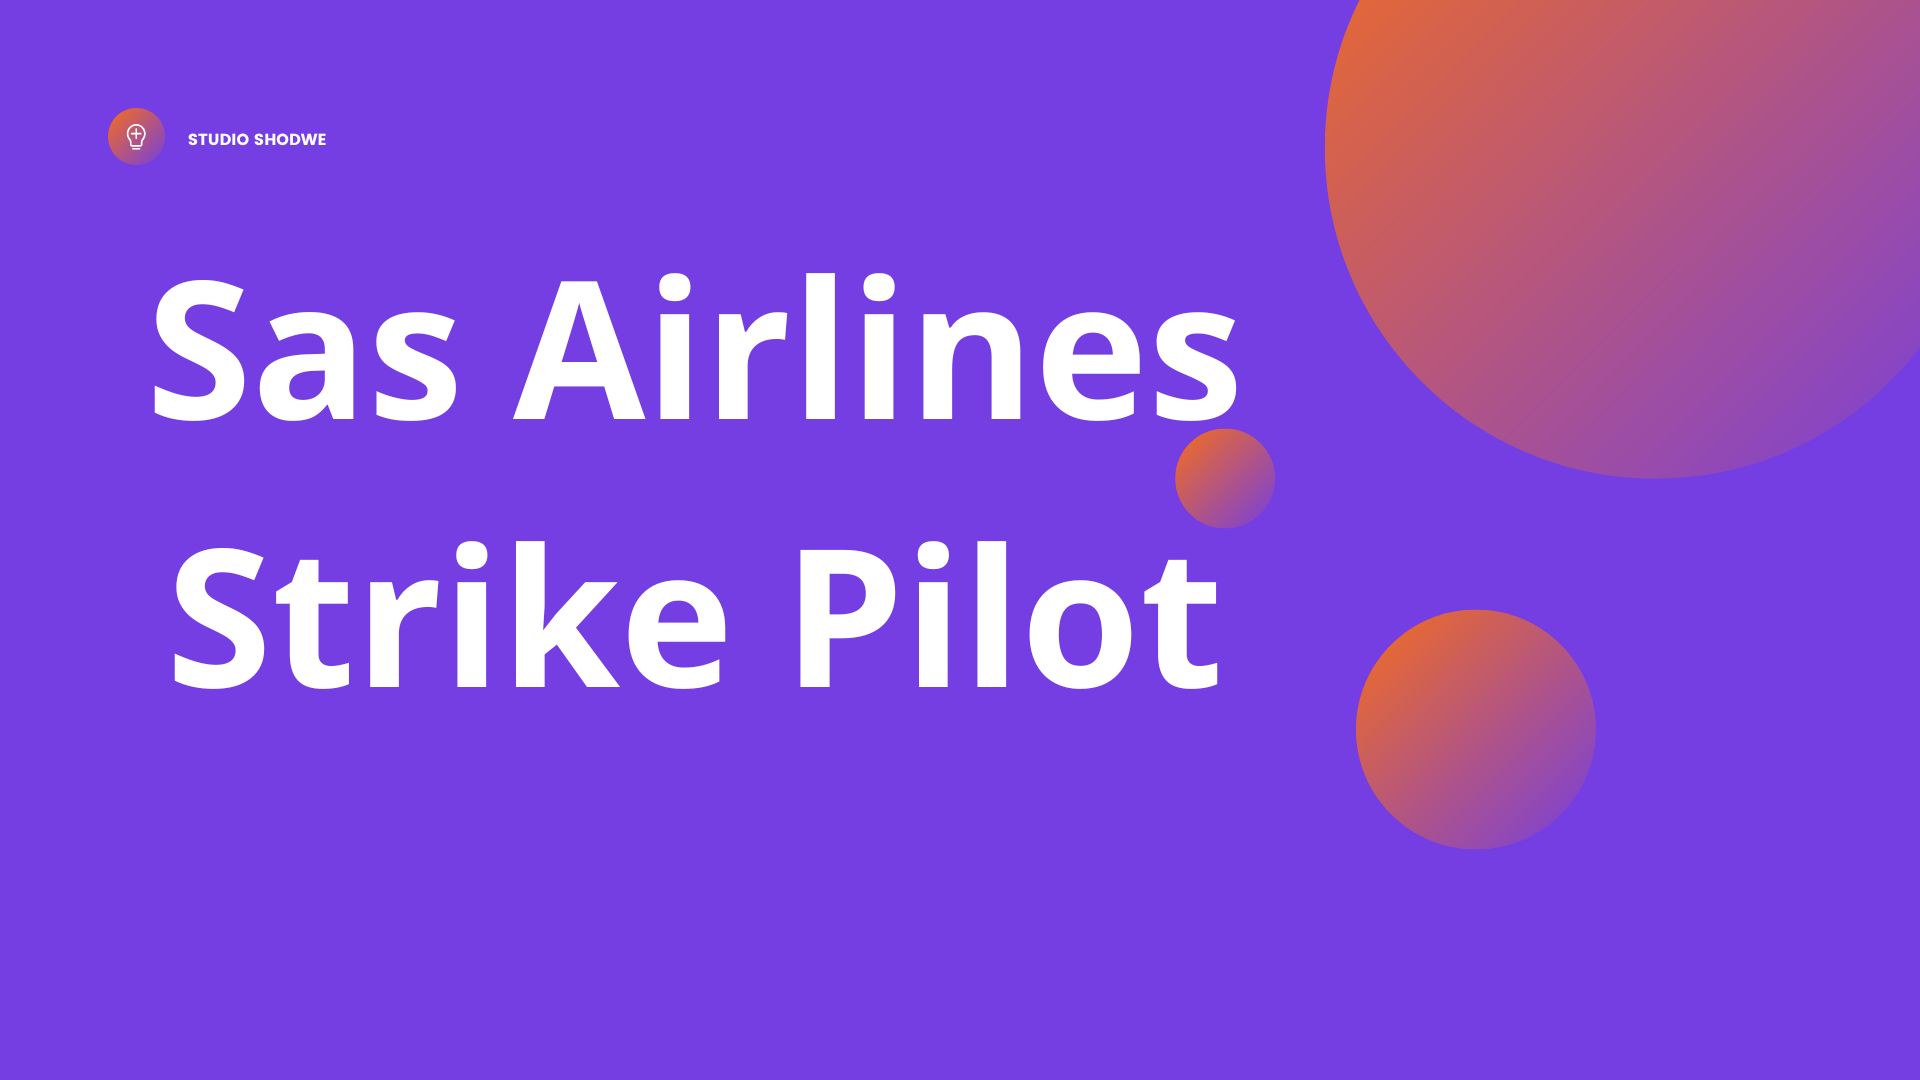 Sas Airlines Strike Pilot